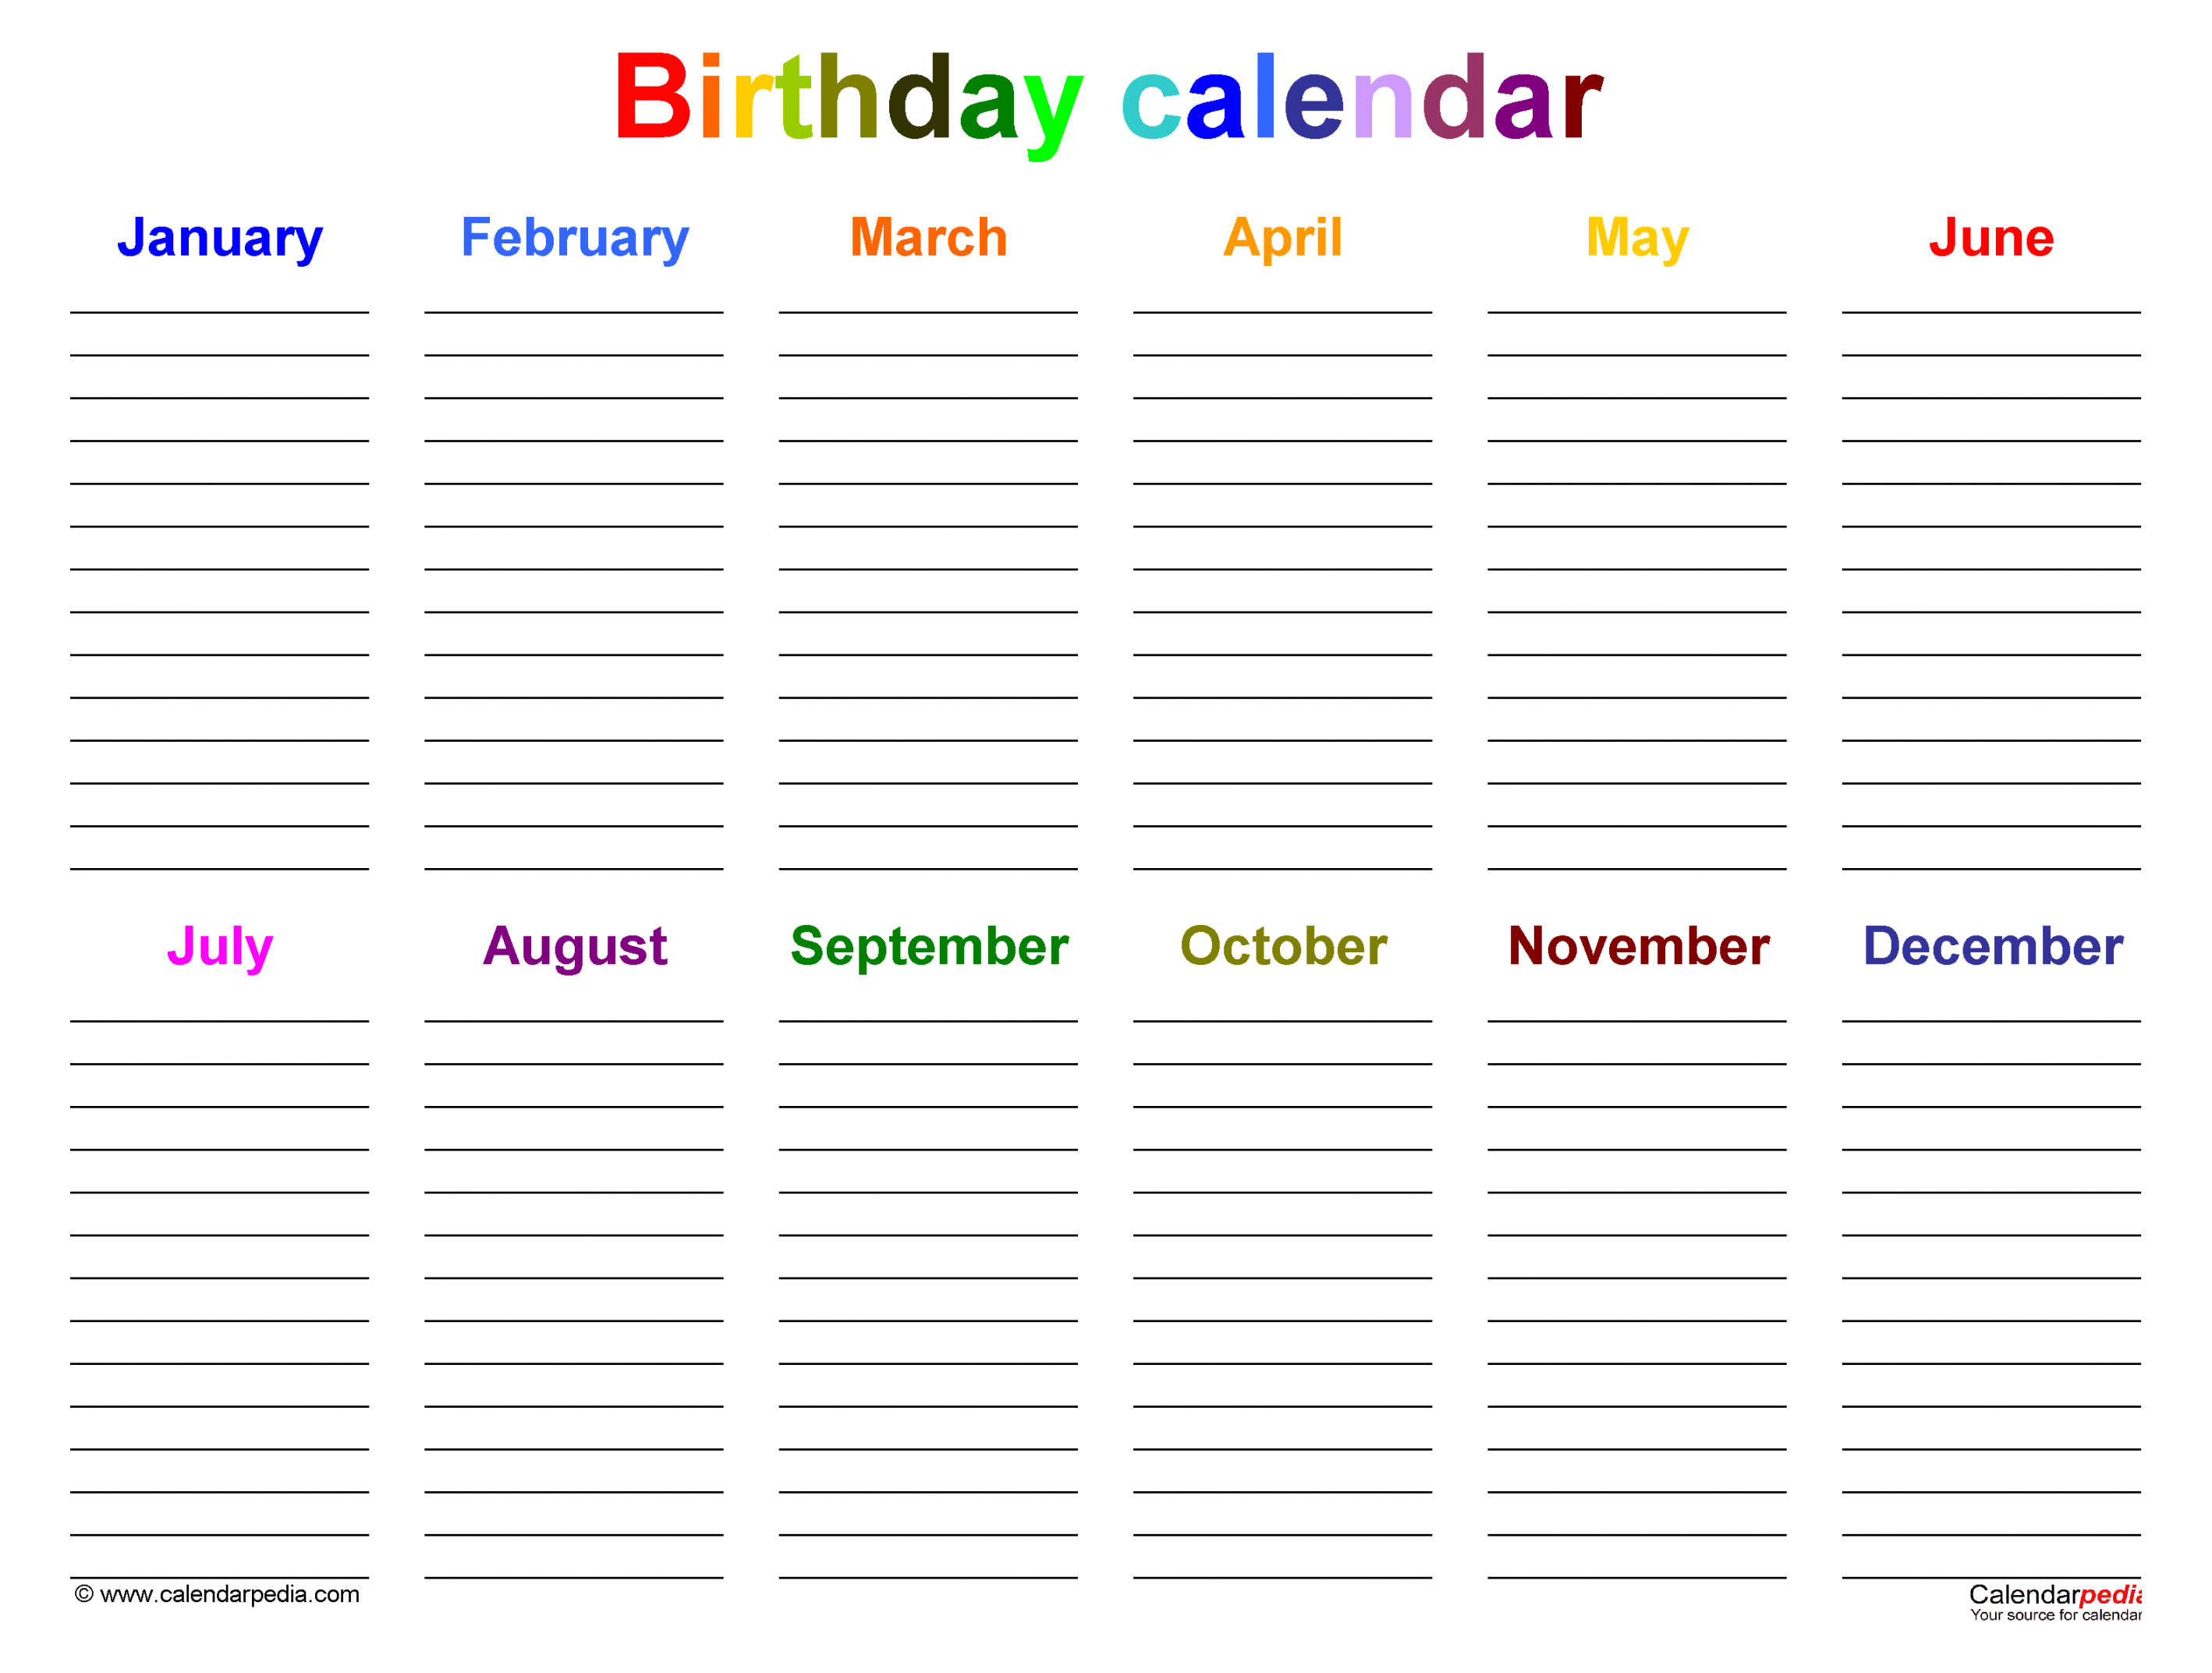 Birthday calendars - Free Printable Microsoft Excel templates